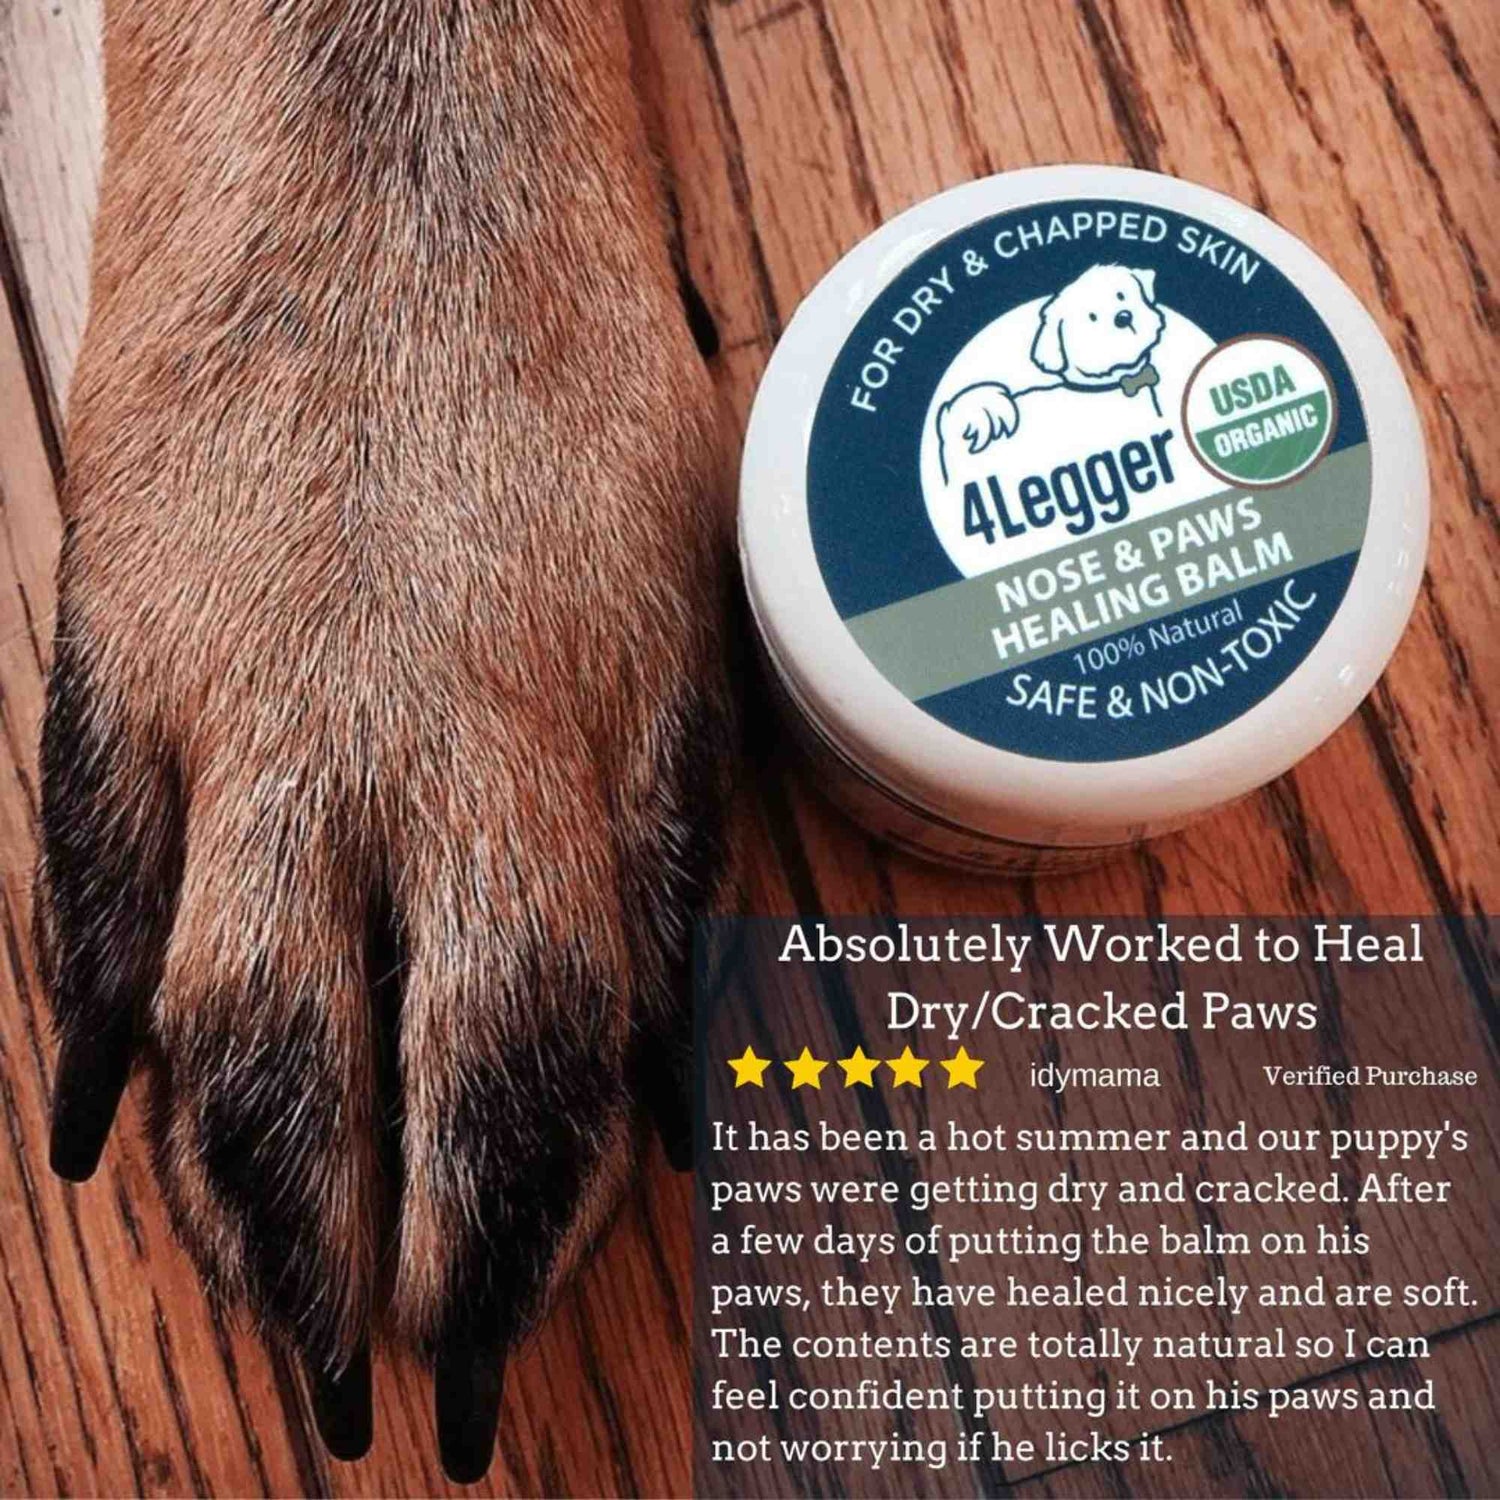 4-legger healing balm usda certified organic healing balm for dog nose and paw pads review